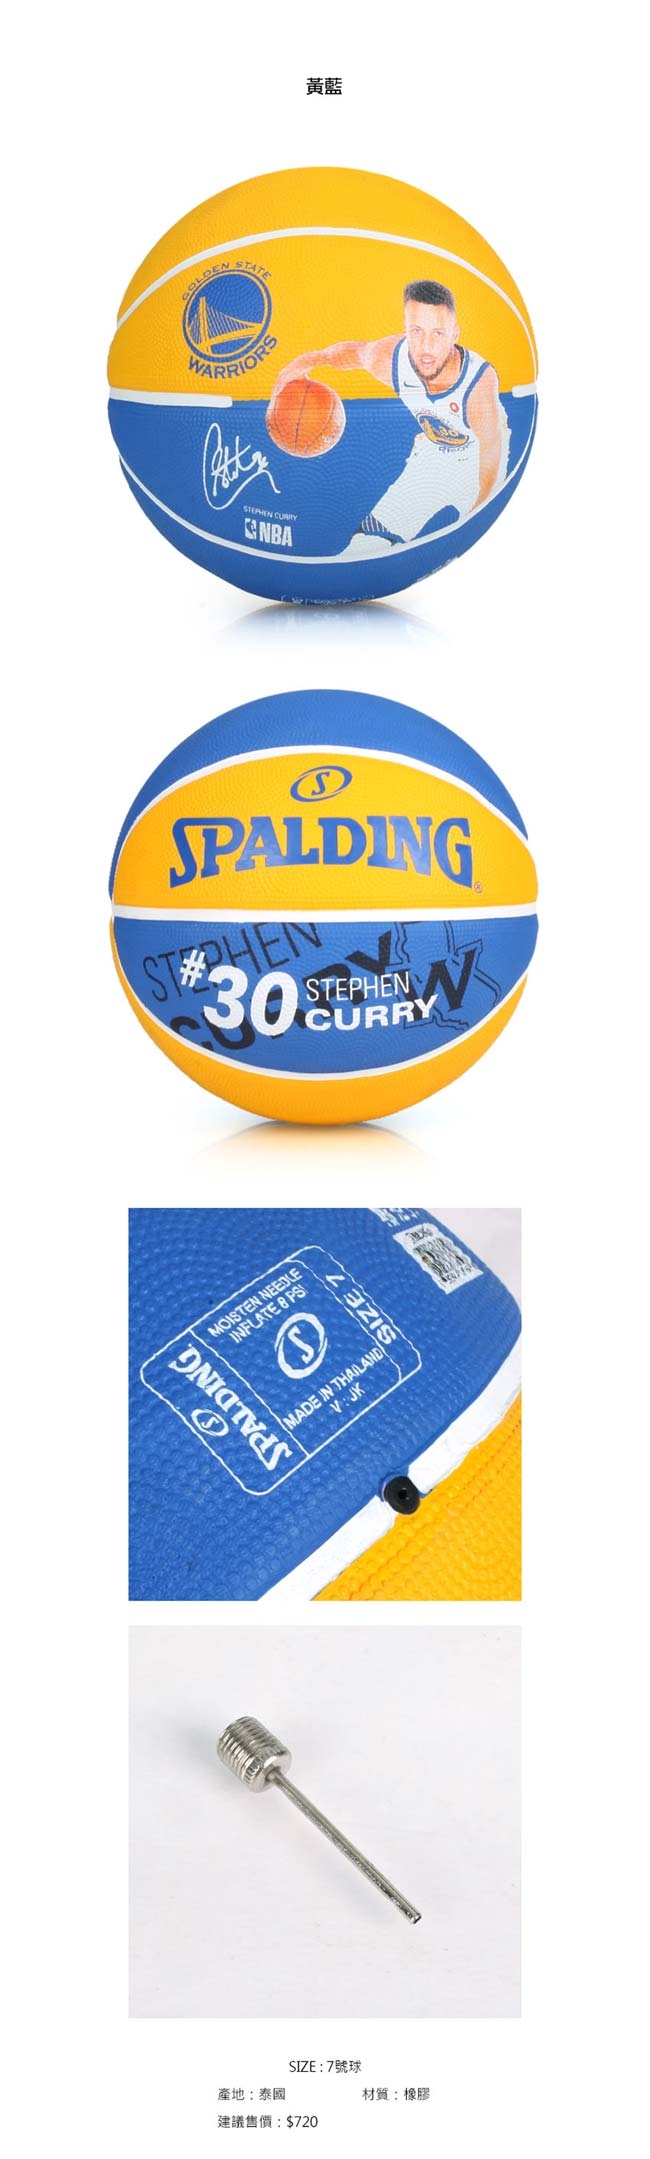 SPALDING 勇士-柯瑞 Curry 籃球 #SPA83844 黃藍